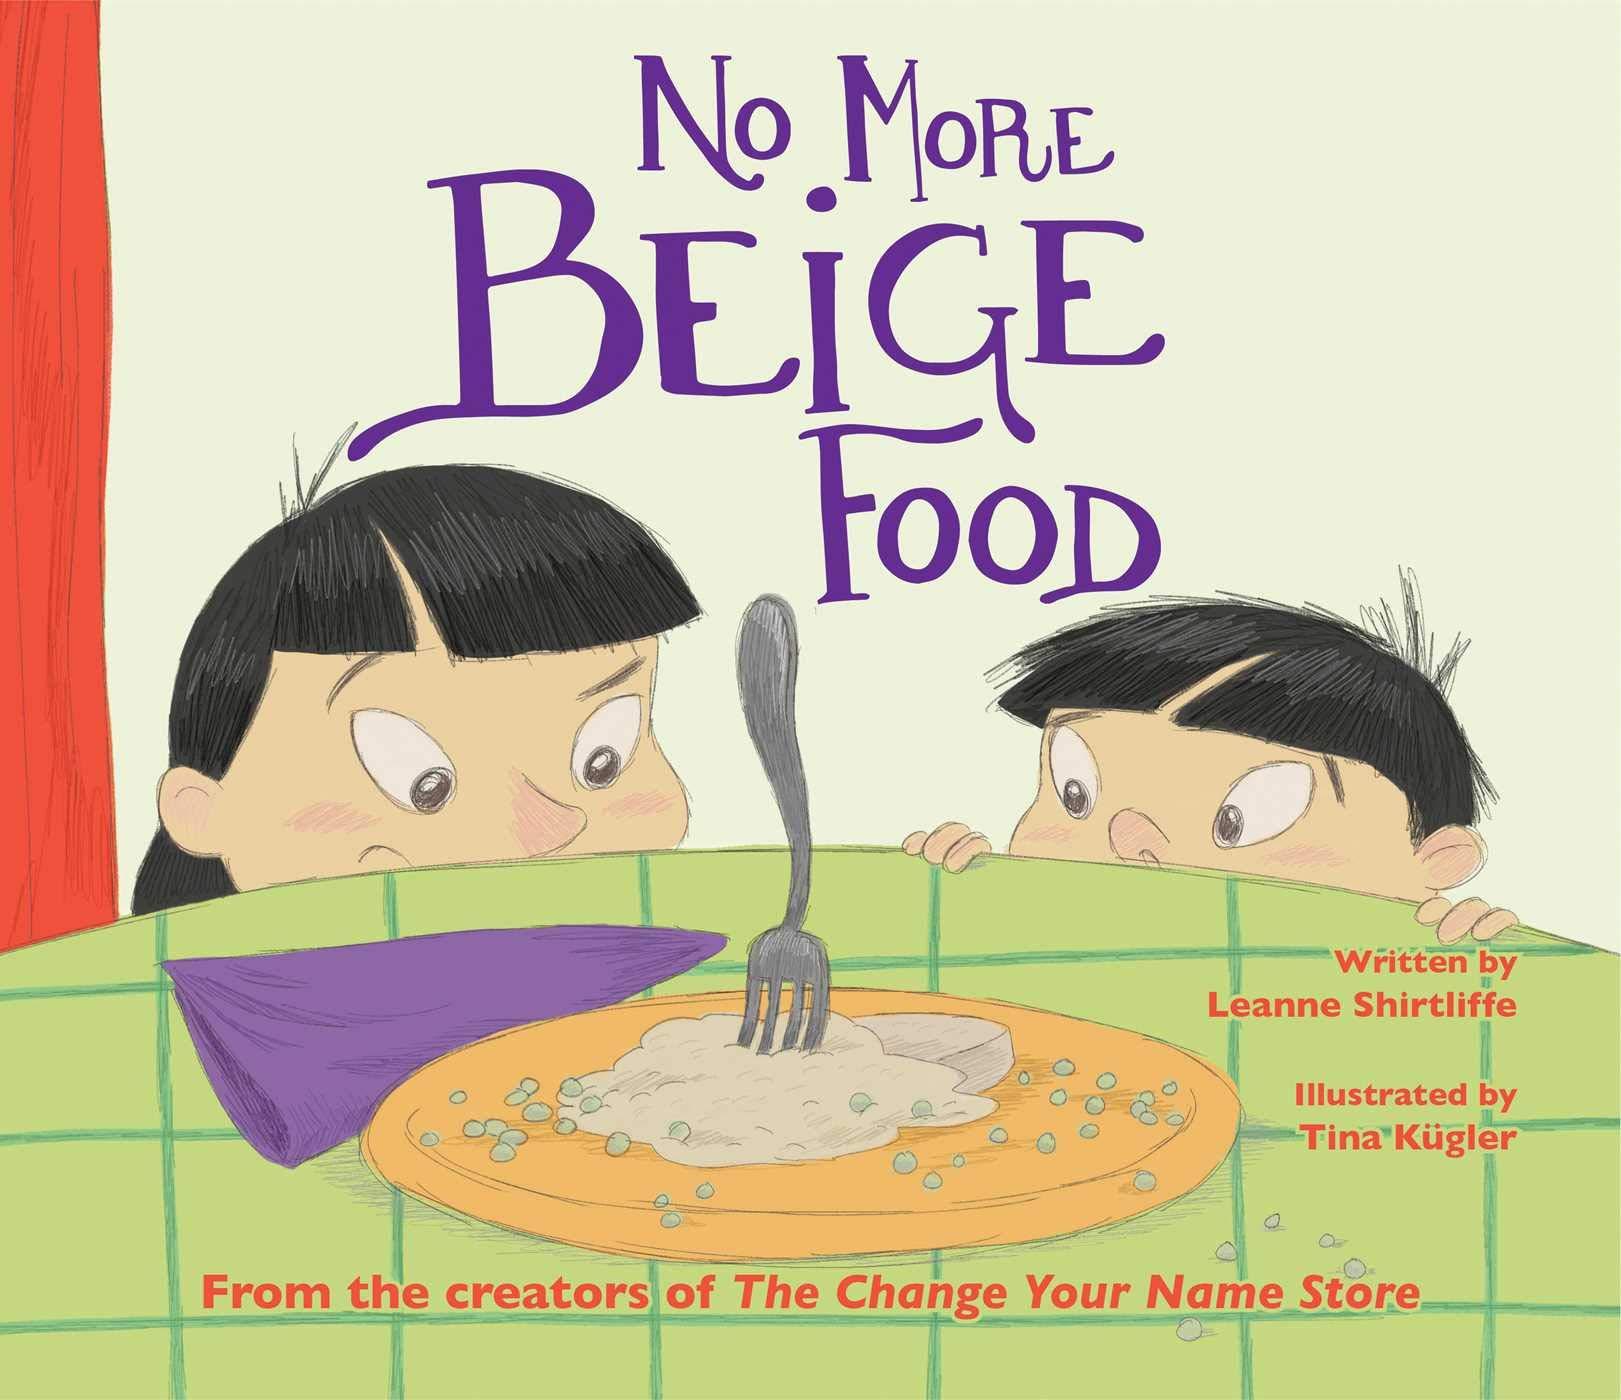 Web_no_more_beige_food